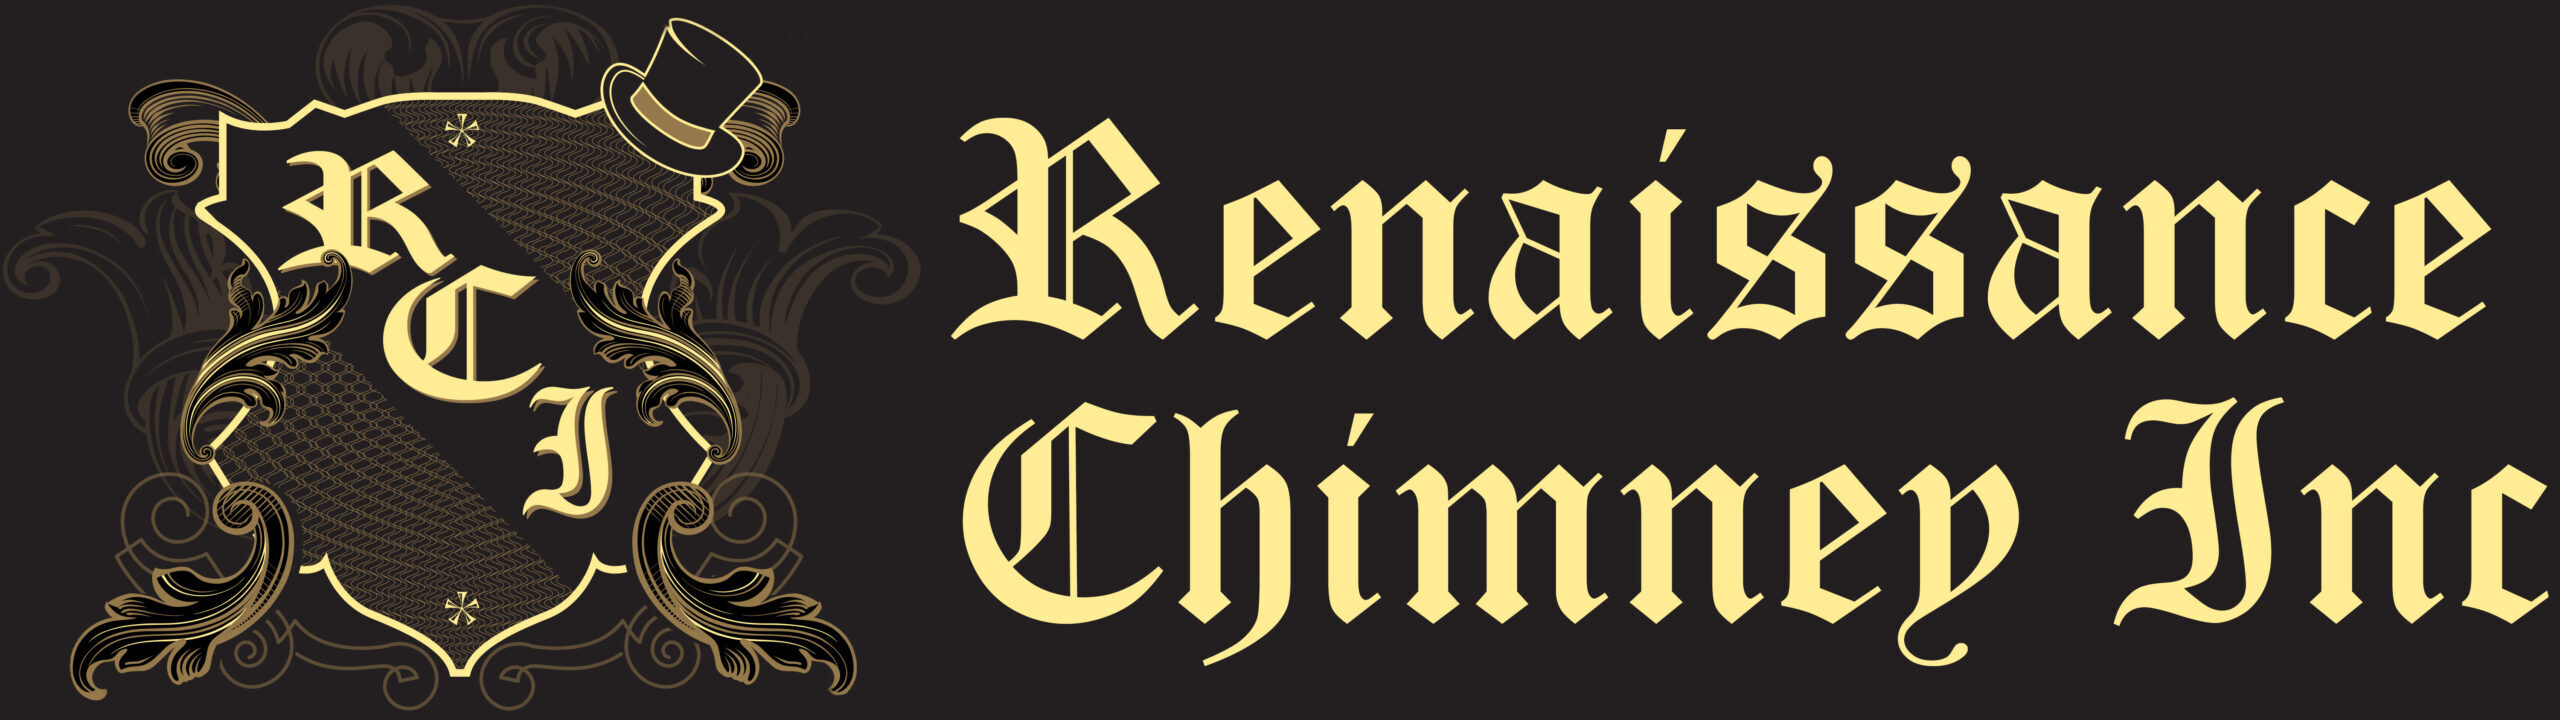 Renaissance Chimney Inc.